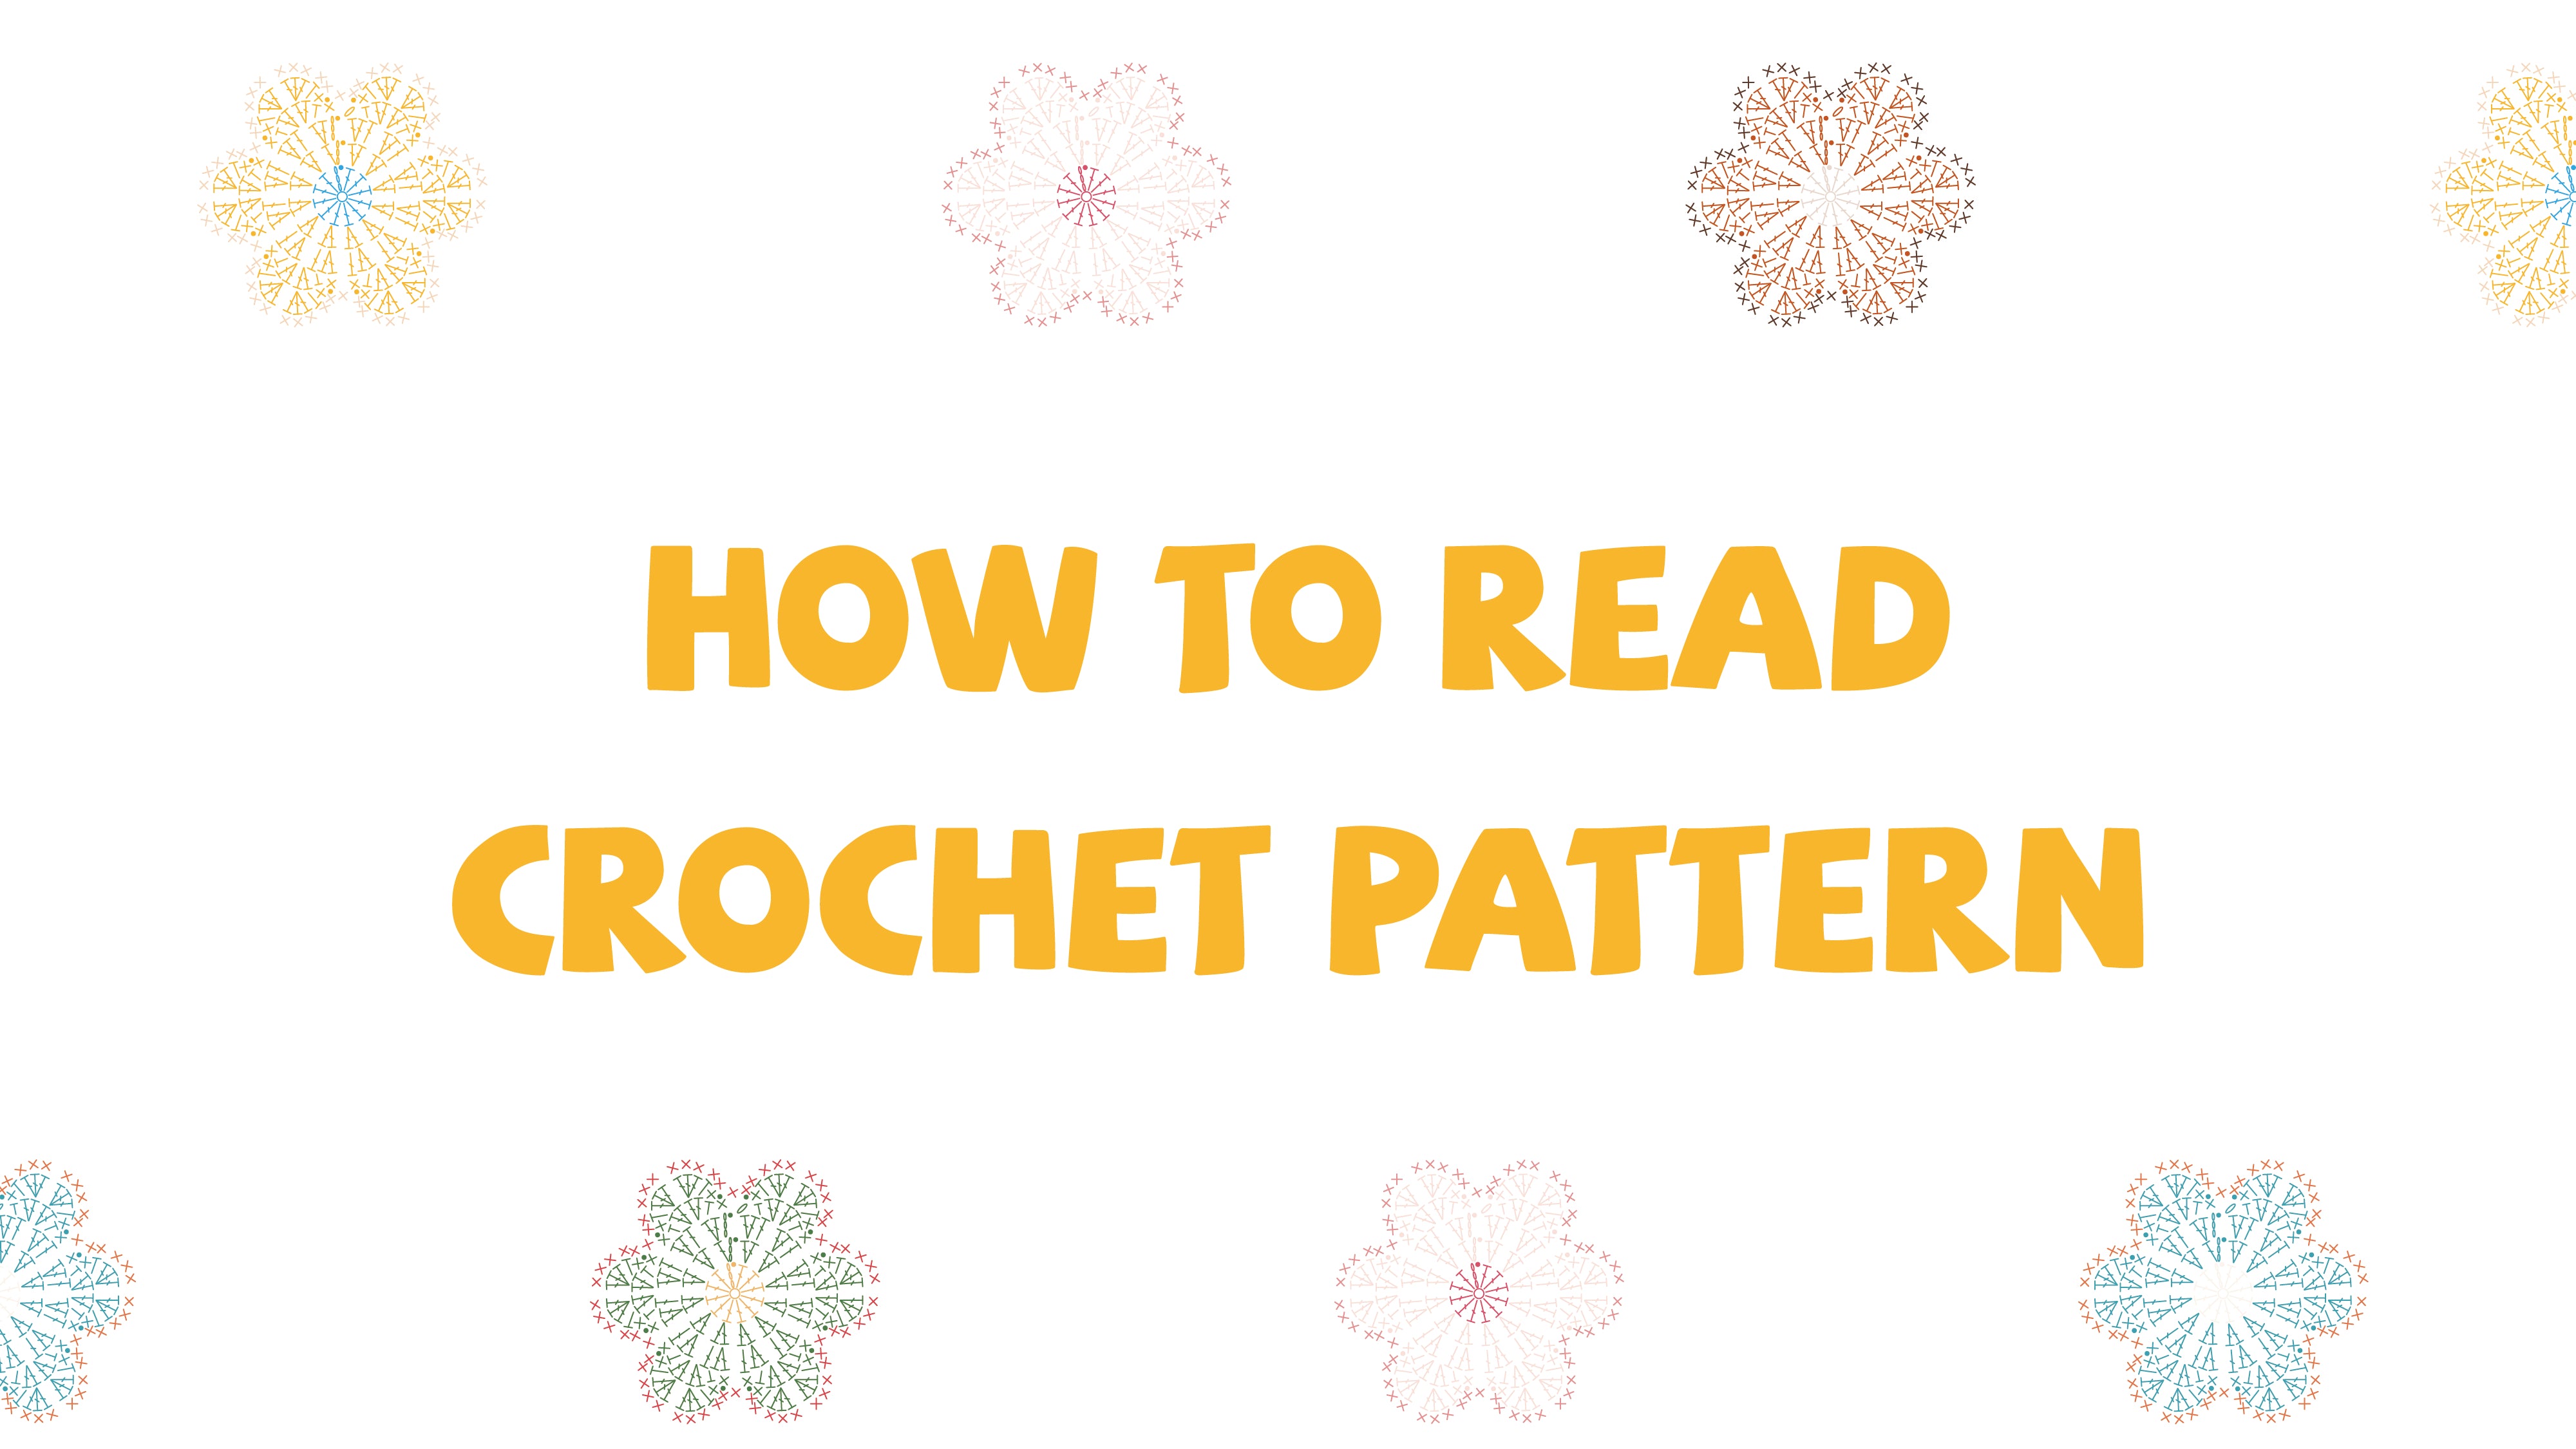 How to read Crochet Pattern